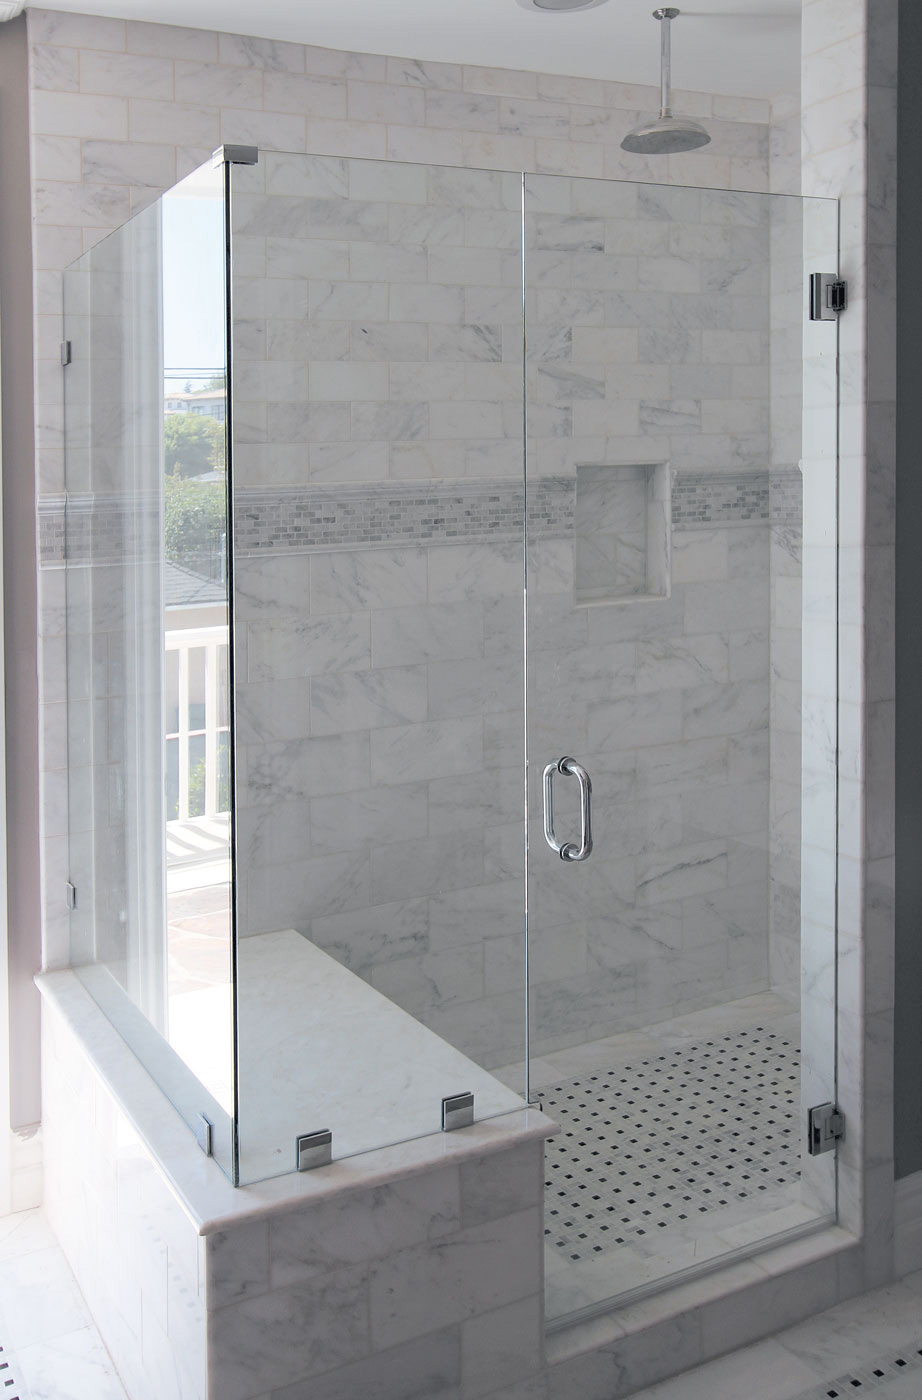 Glass Shower Doors & Enclosures Replacement, Repair & Installation - NELSON GLASS ARIZONA